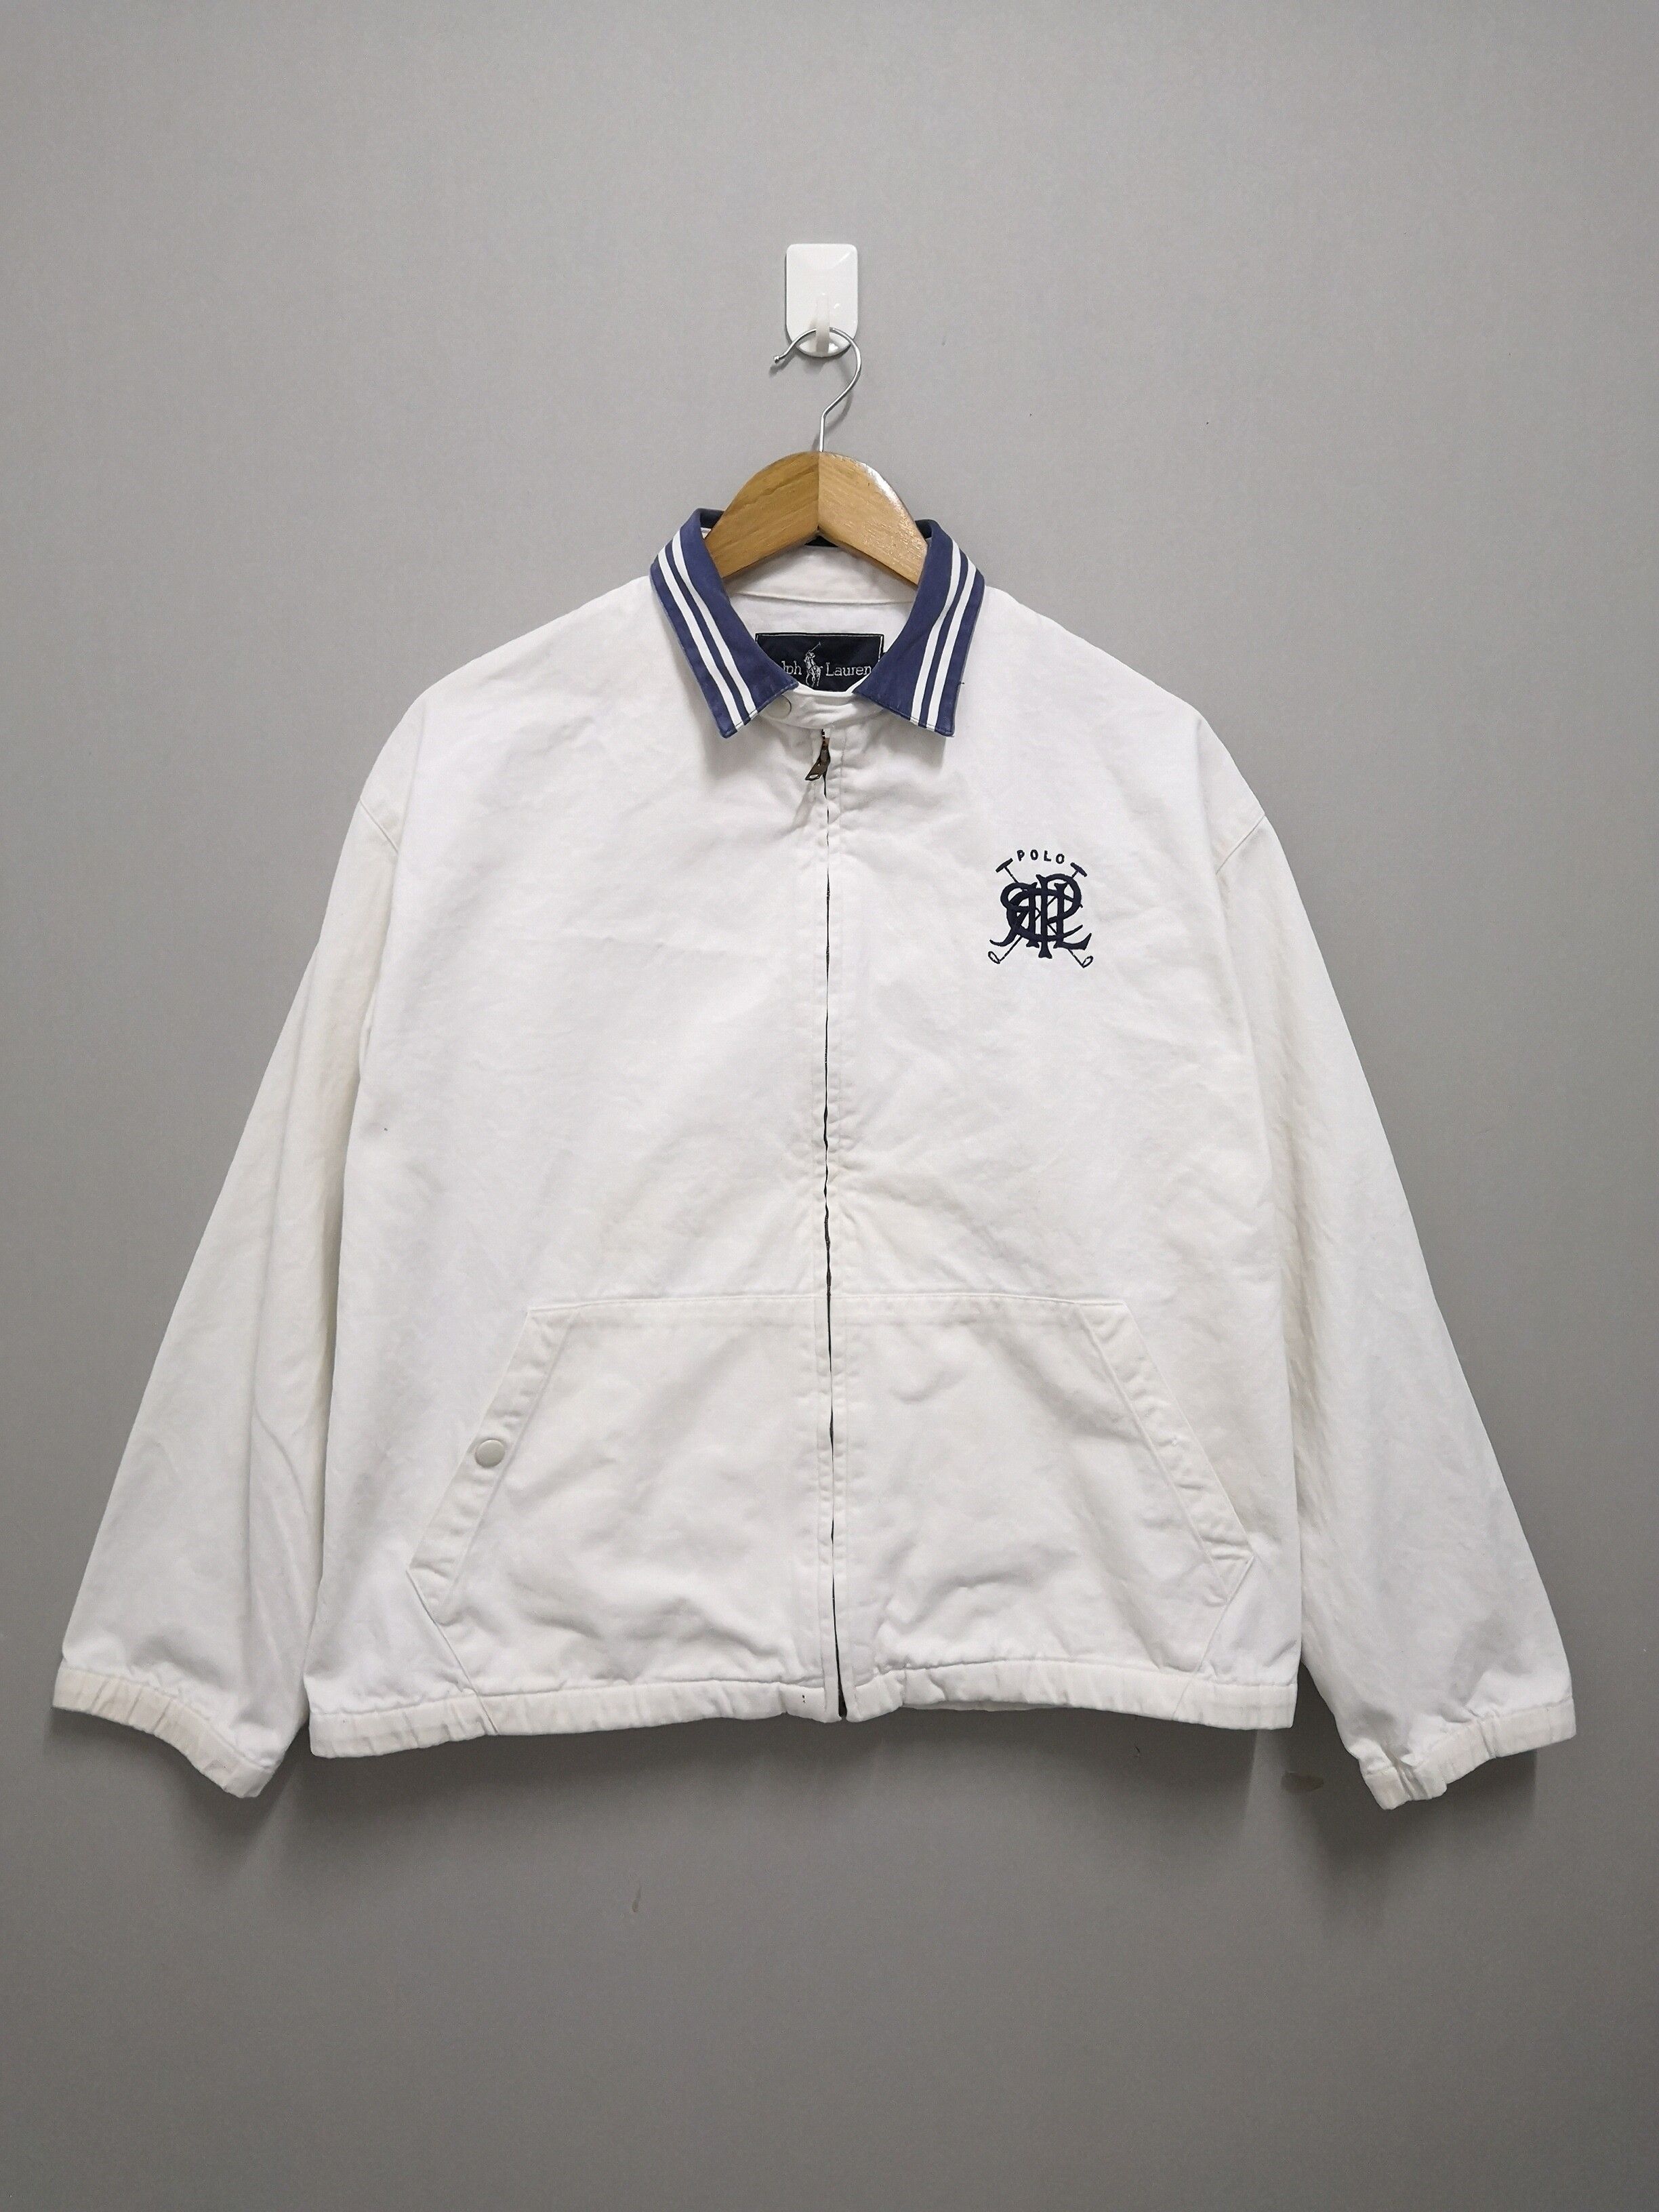 Vintage Polo Ralph Lauren USA Made Jacket - 1